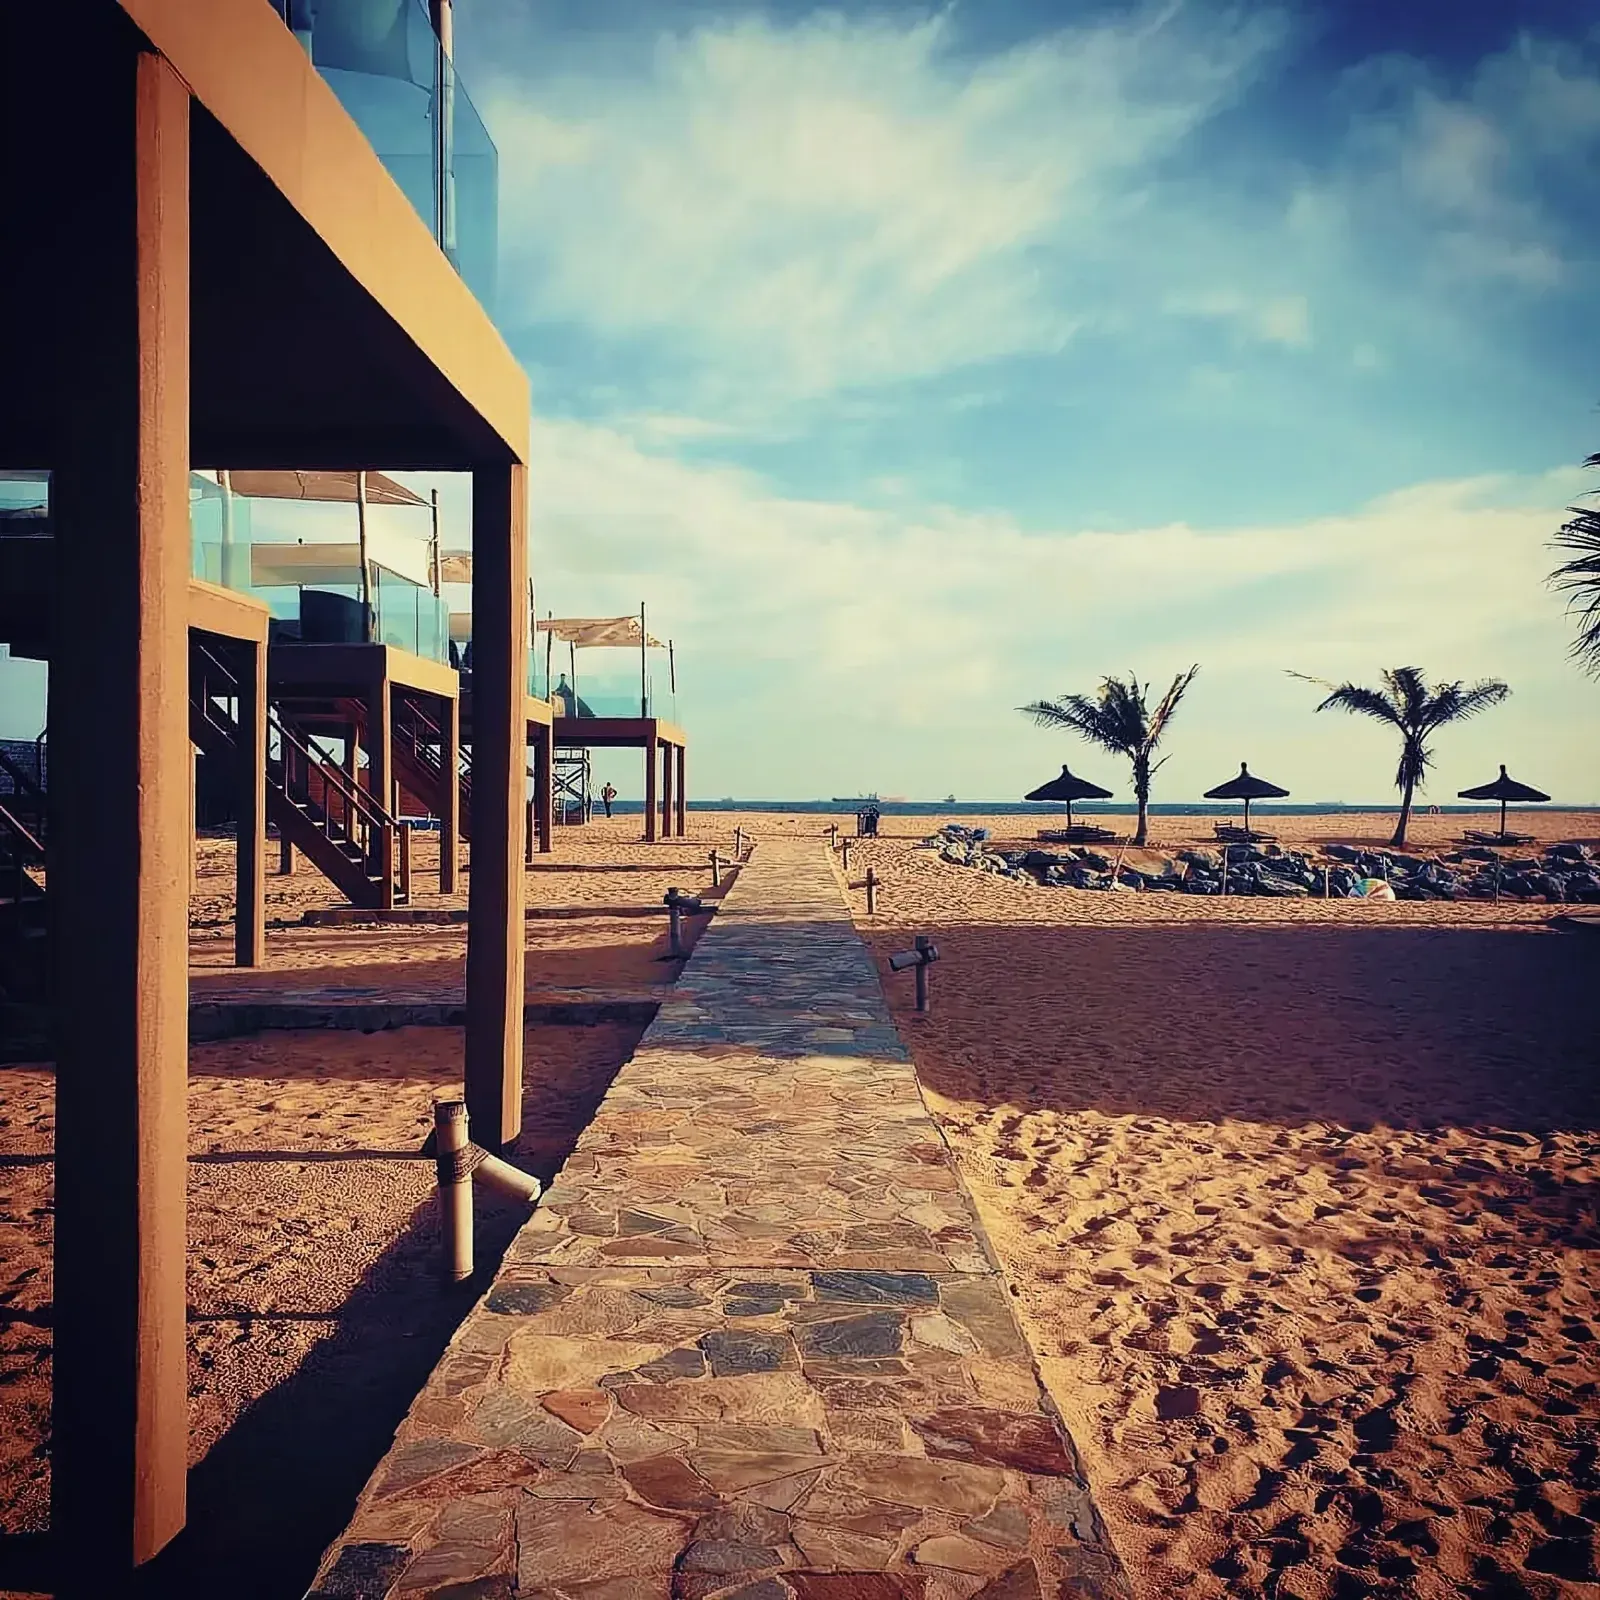 Serene beach scene with a stone walkway, palm tree, and beach umbrella